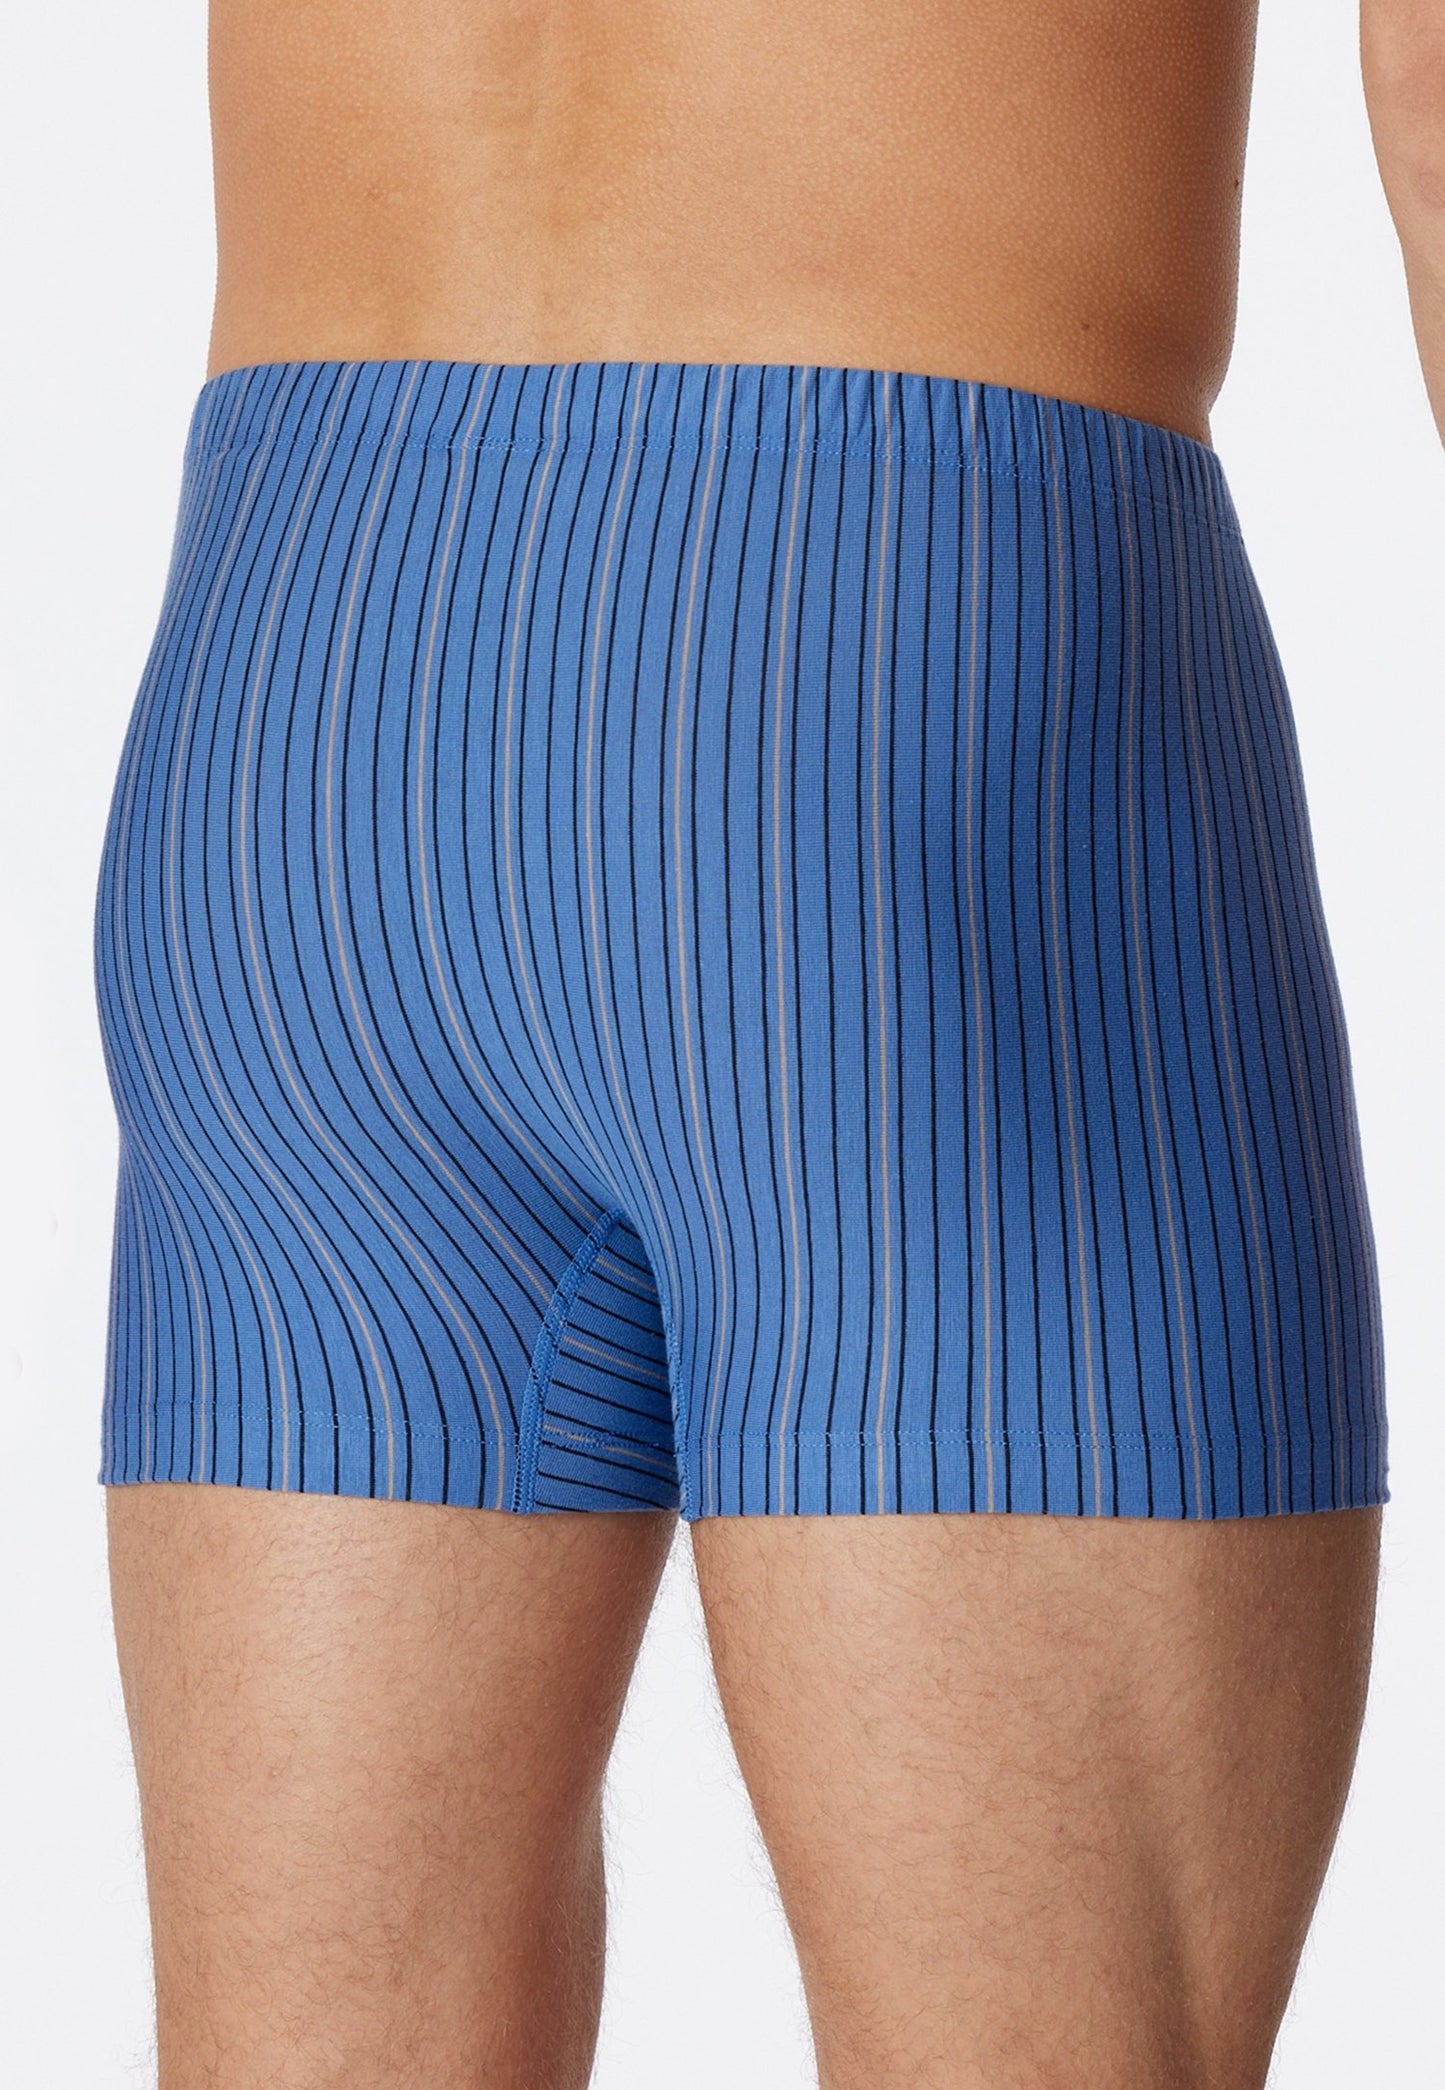 Shorts (Atlantikblau)